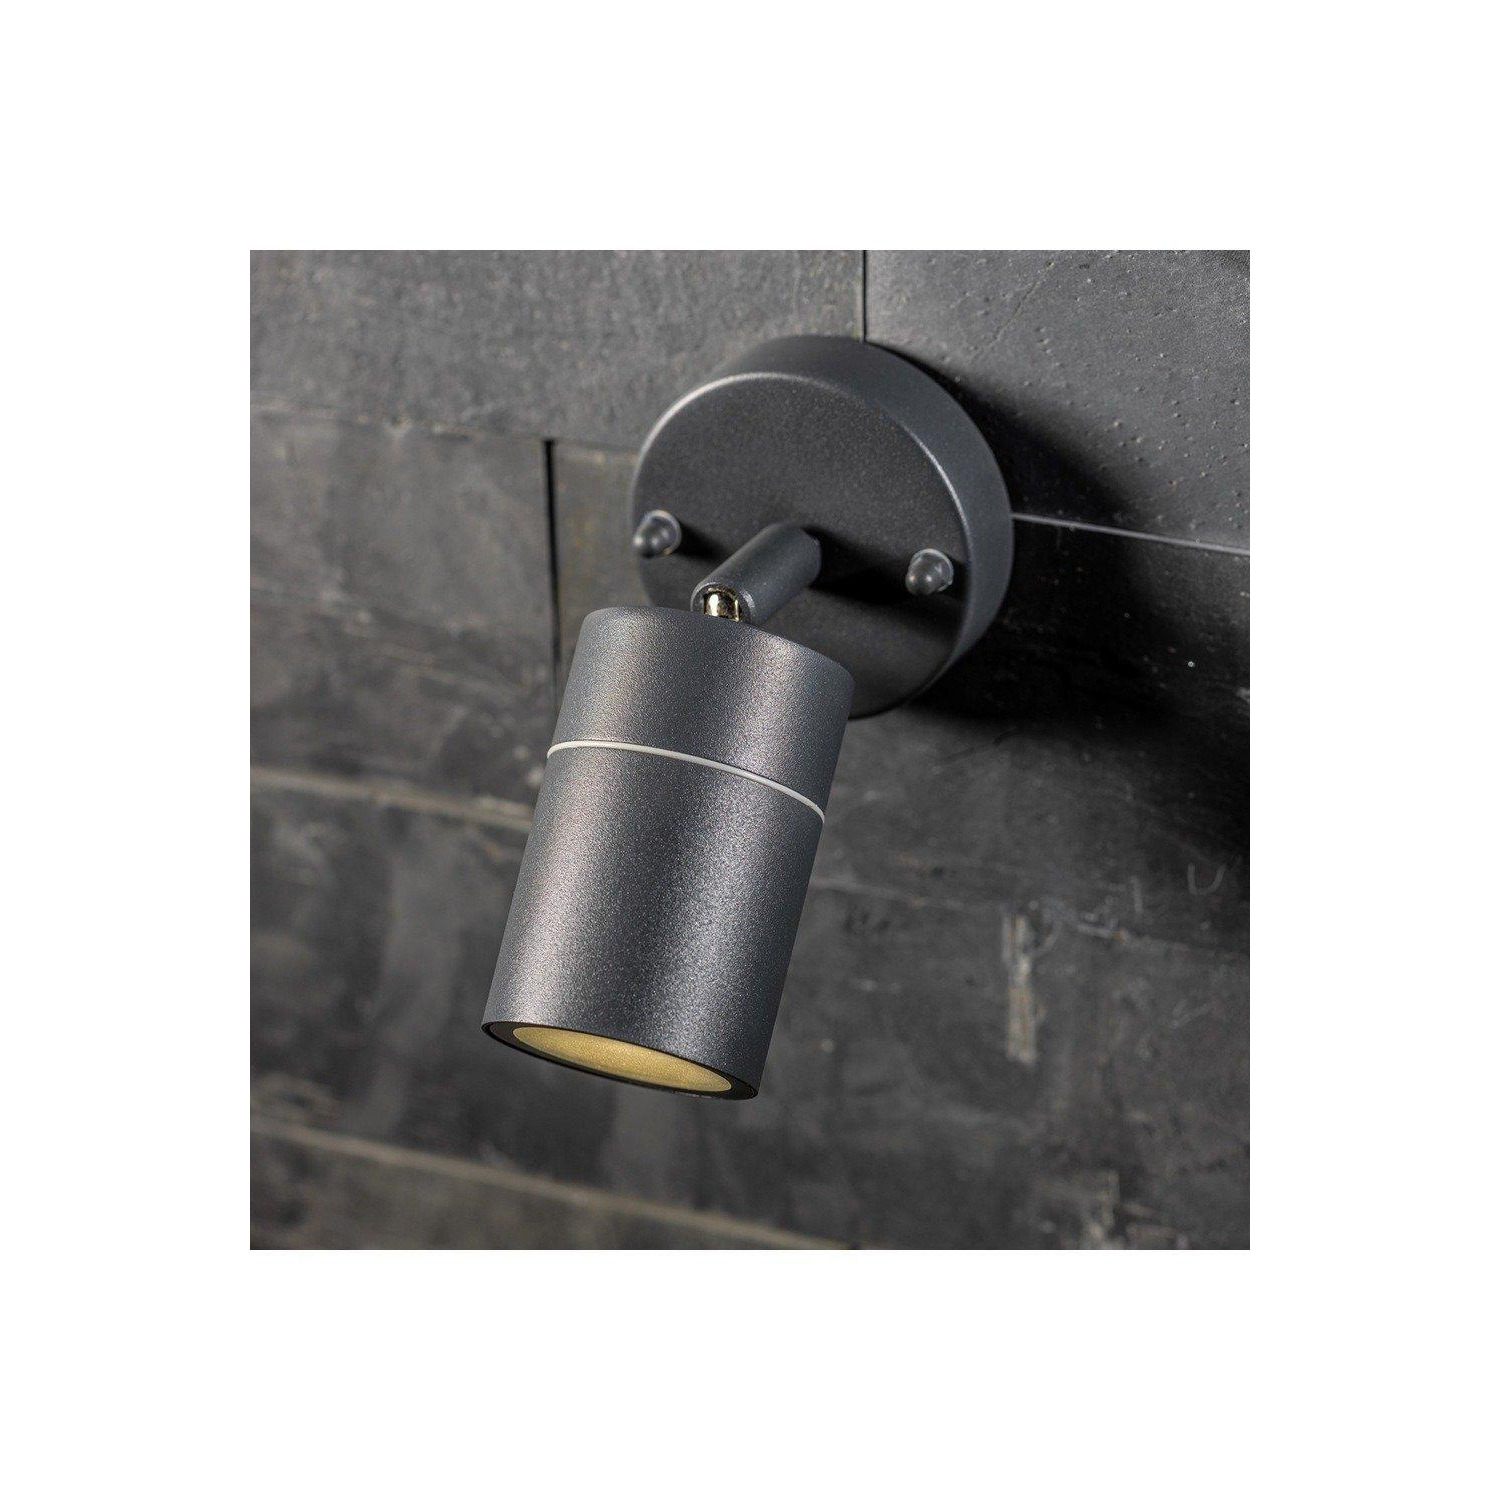 CGC lighting 'Mia' Dark Grey Stainless Steel GU10 Adjustable Outdoor Wall Light IP44 - image 1